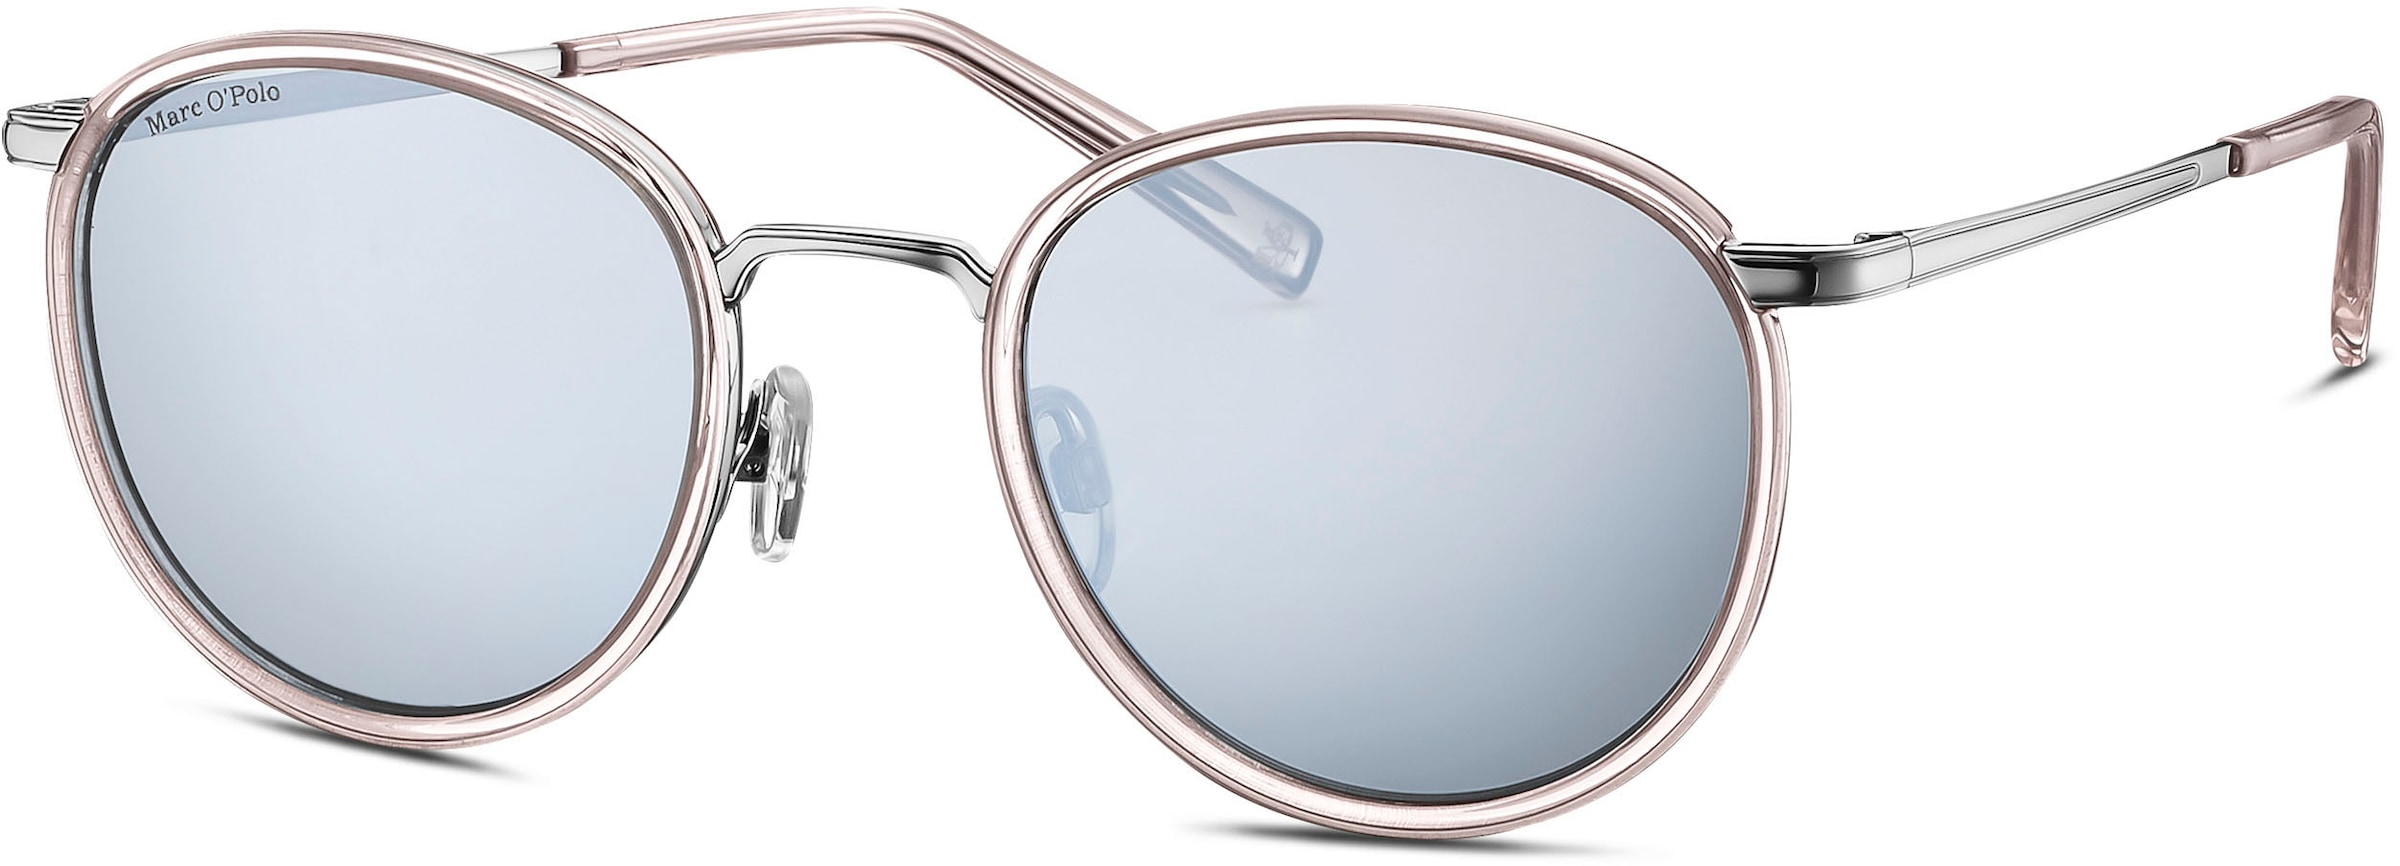 Sonnenbrille »Modell 505105«, Panto-Form